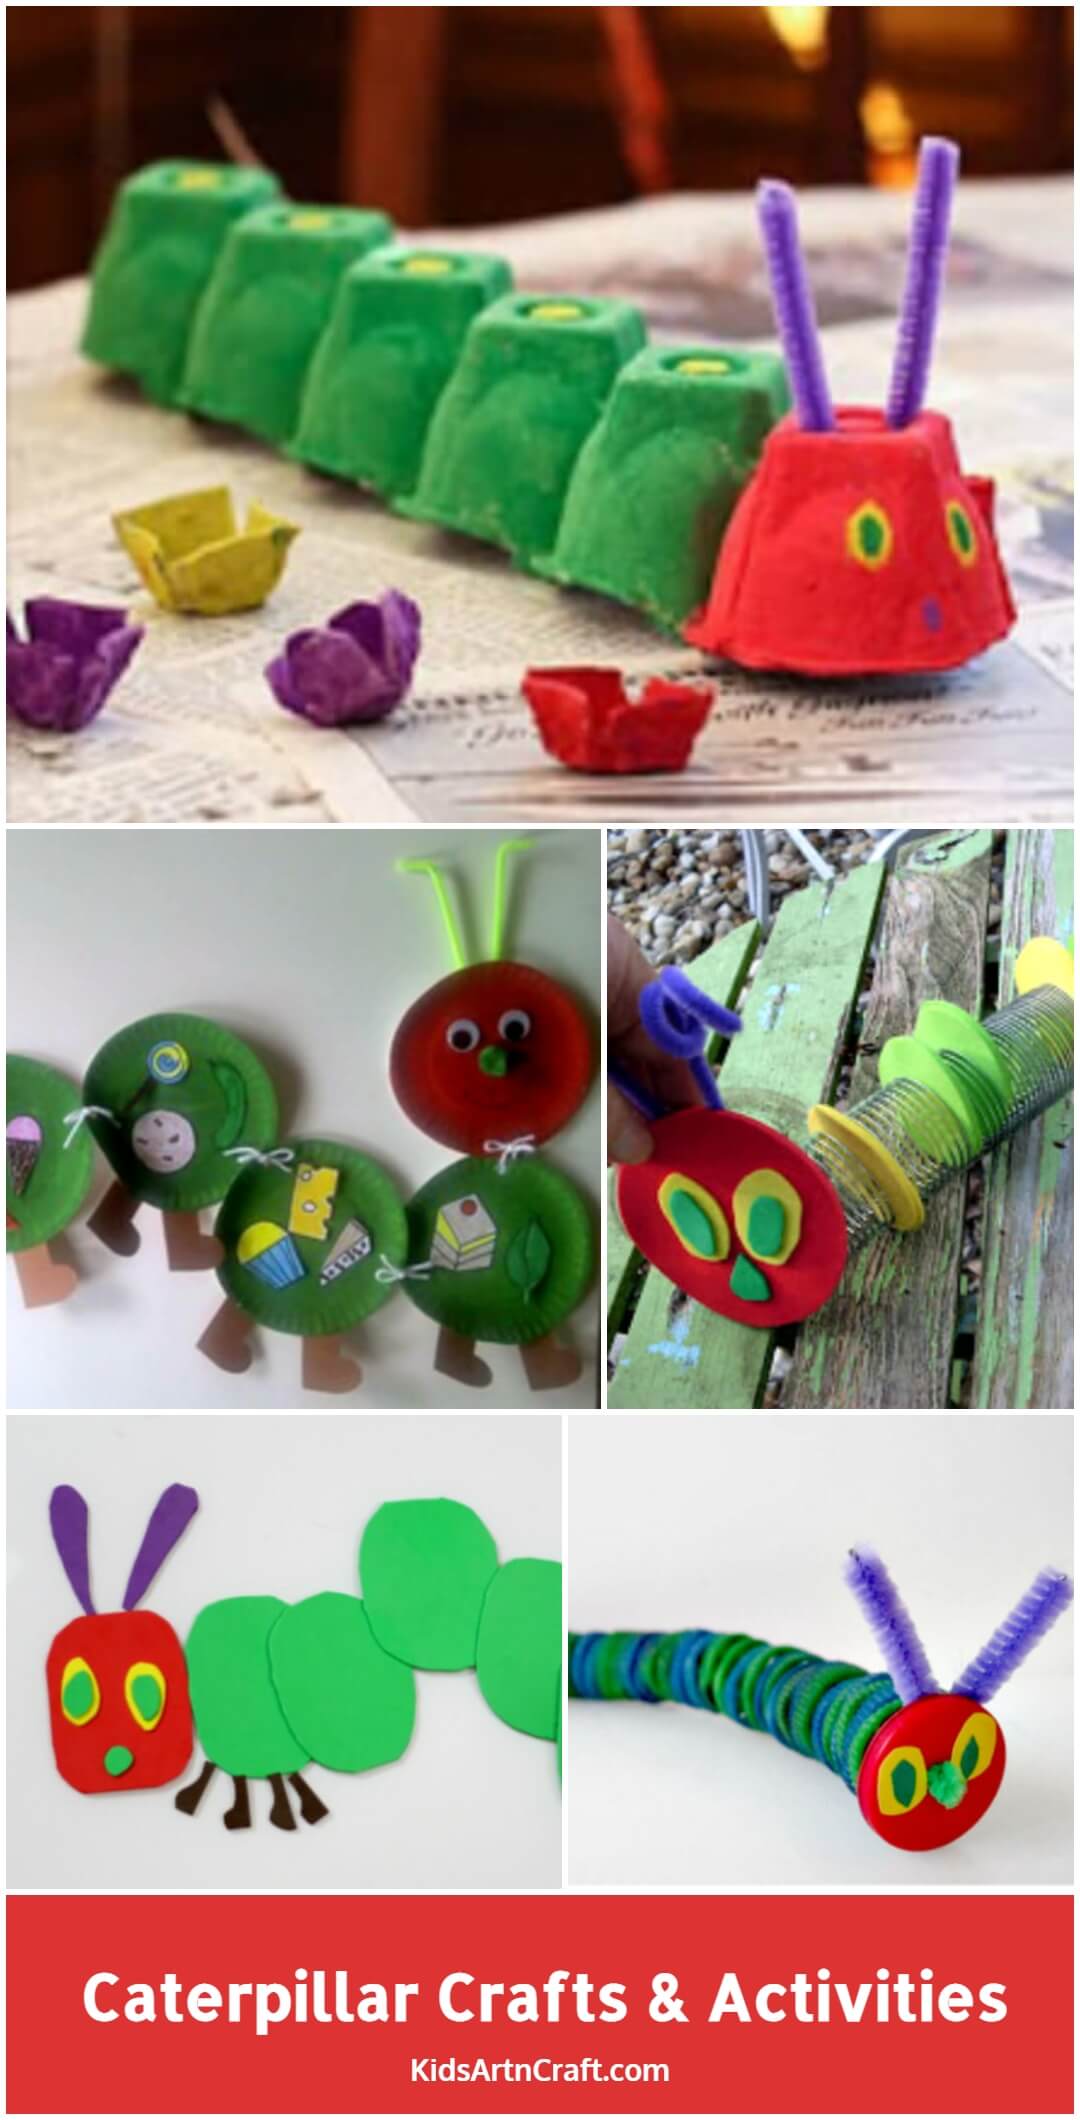  The Very Hungry Caterpillar Crafts & Activities